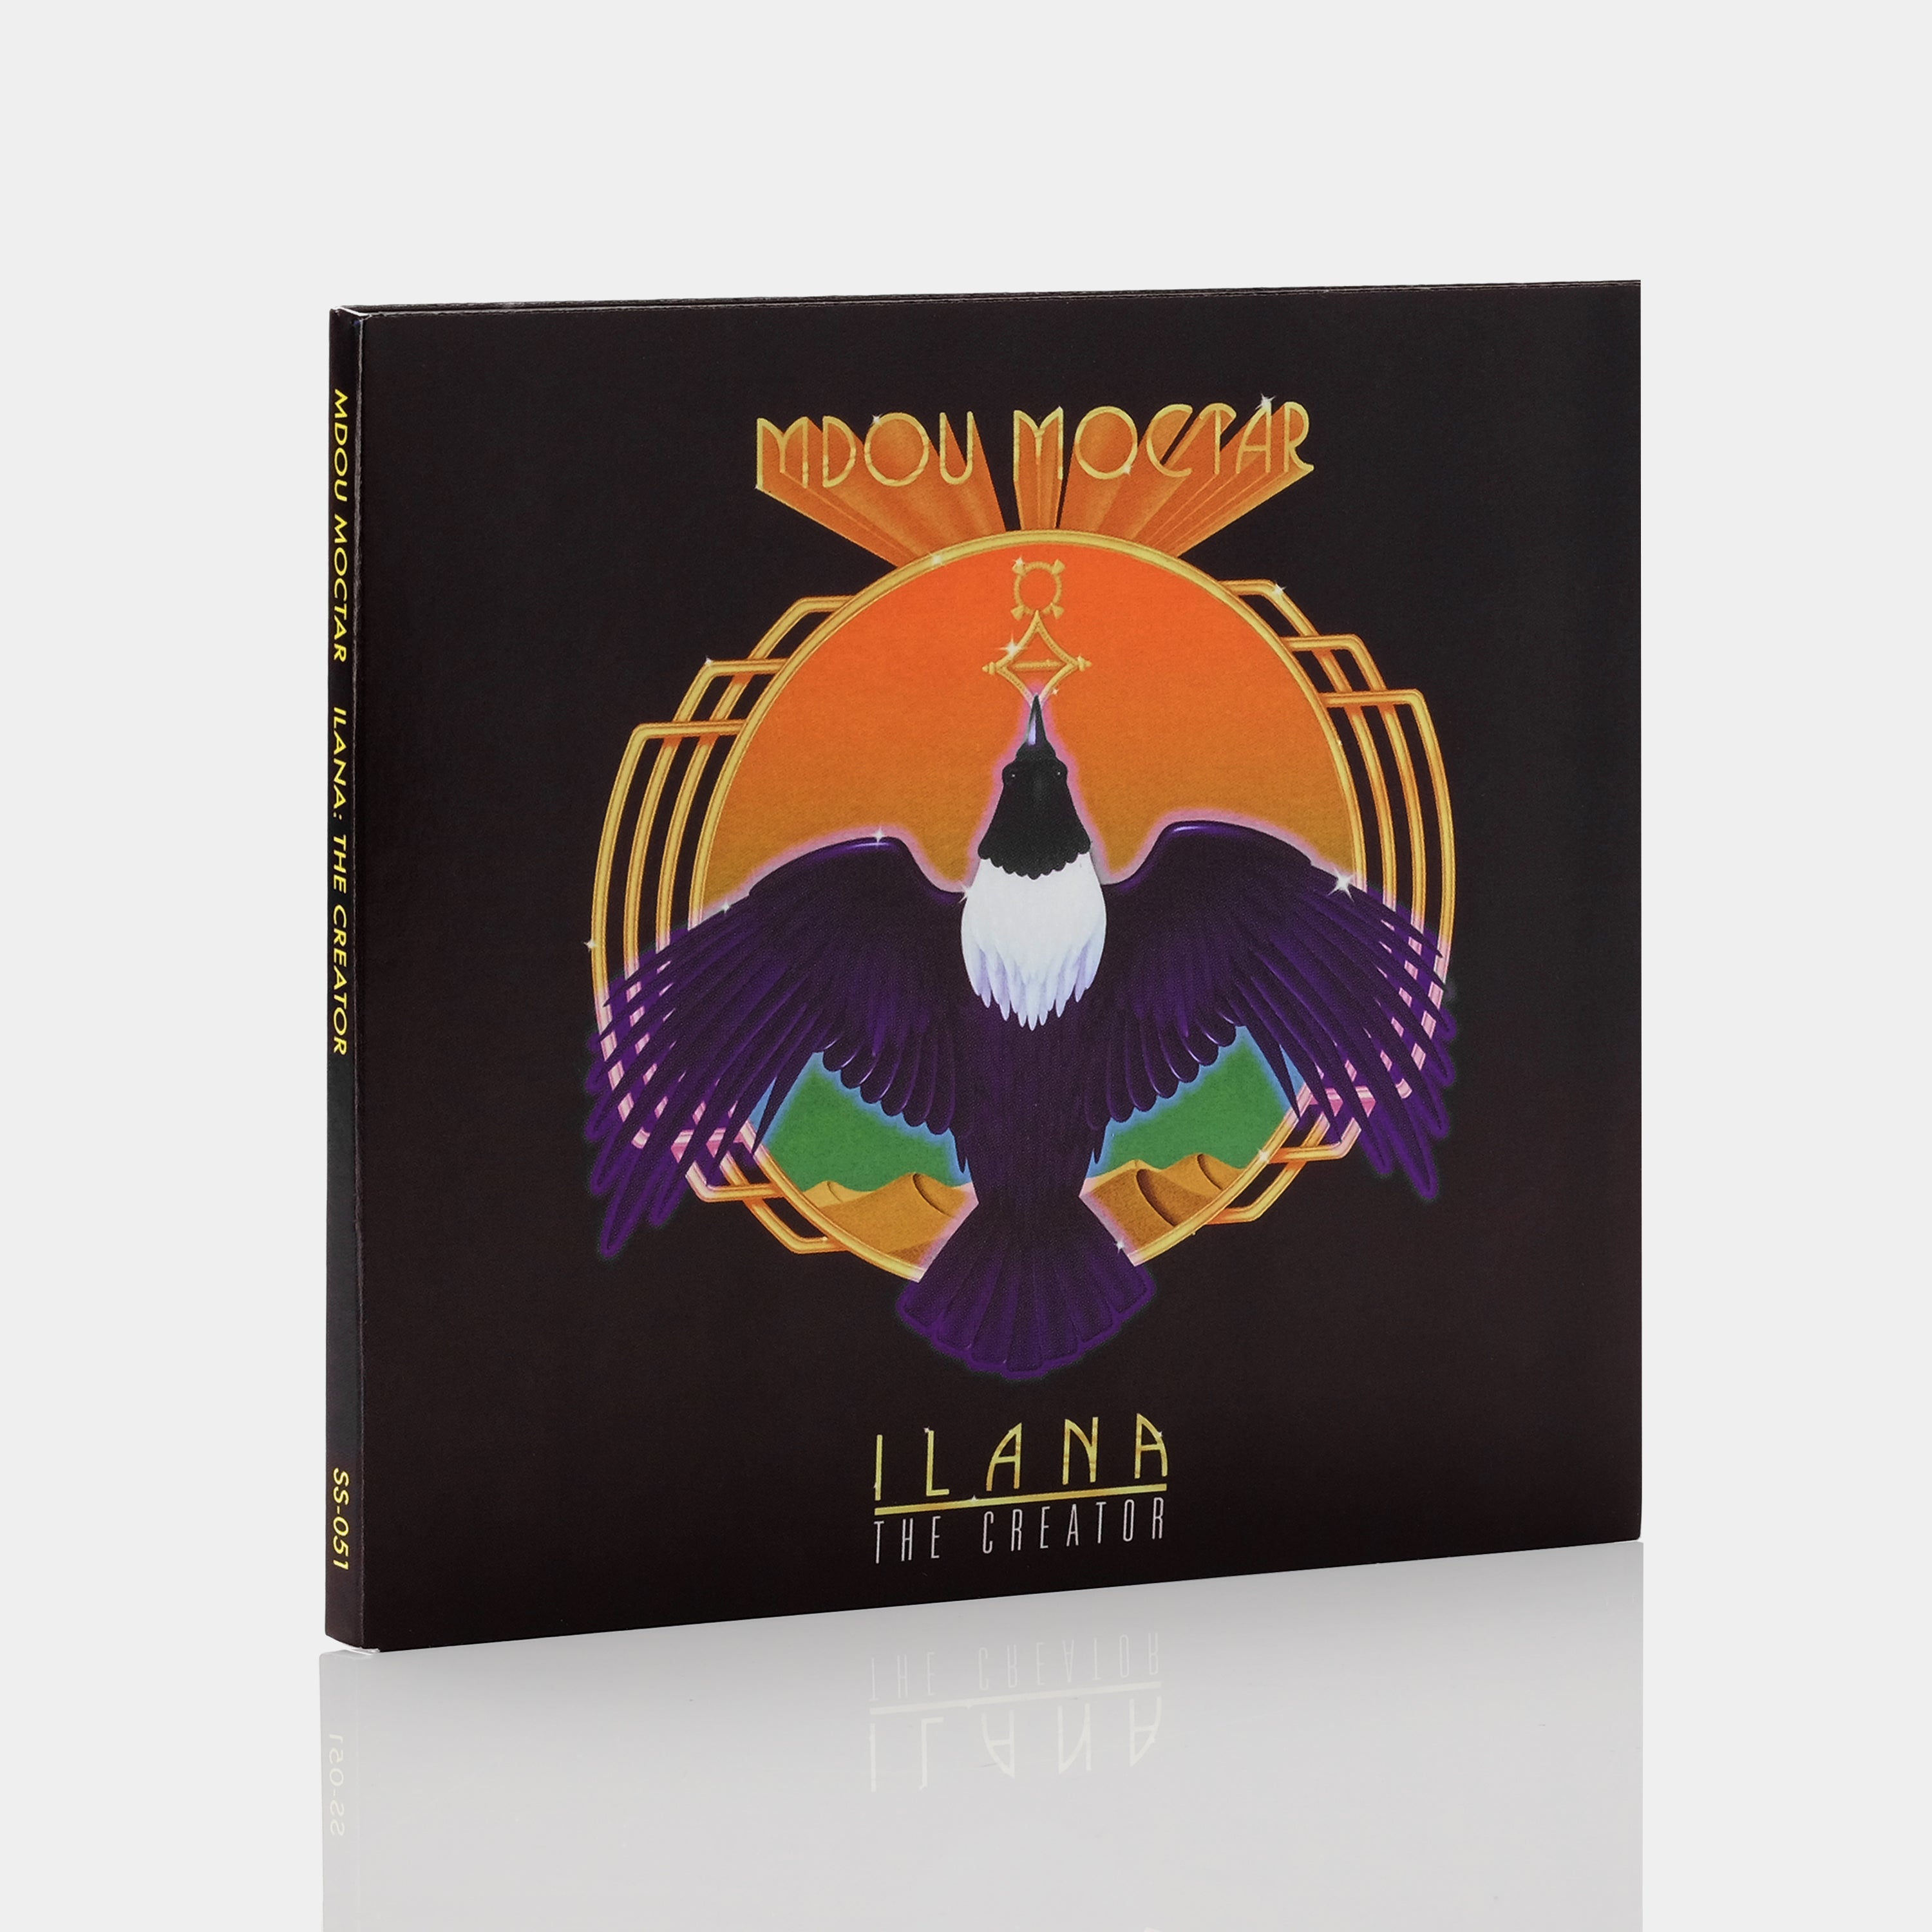 Mdou Moctar - Ilana: The Creator CD